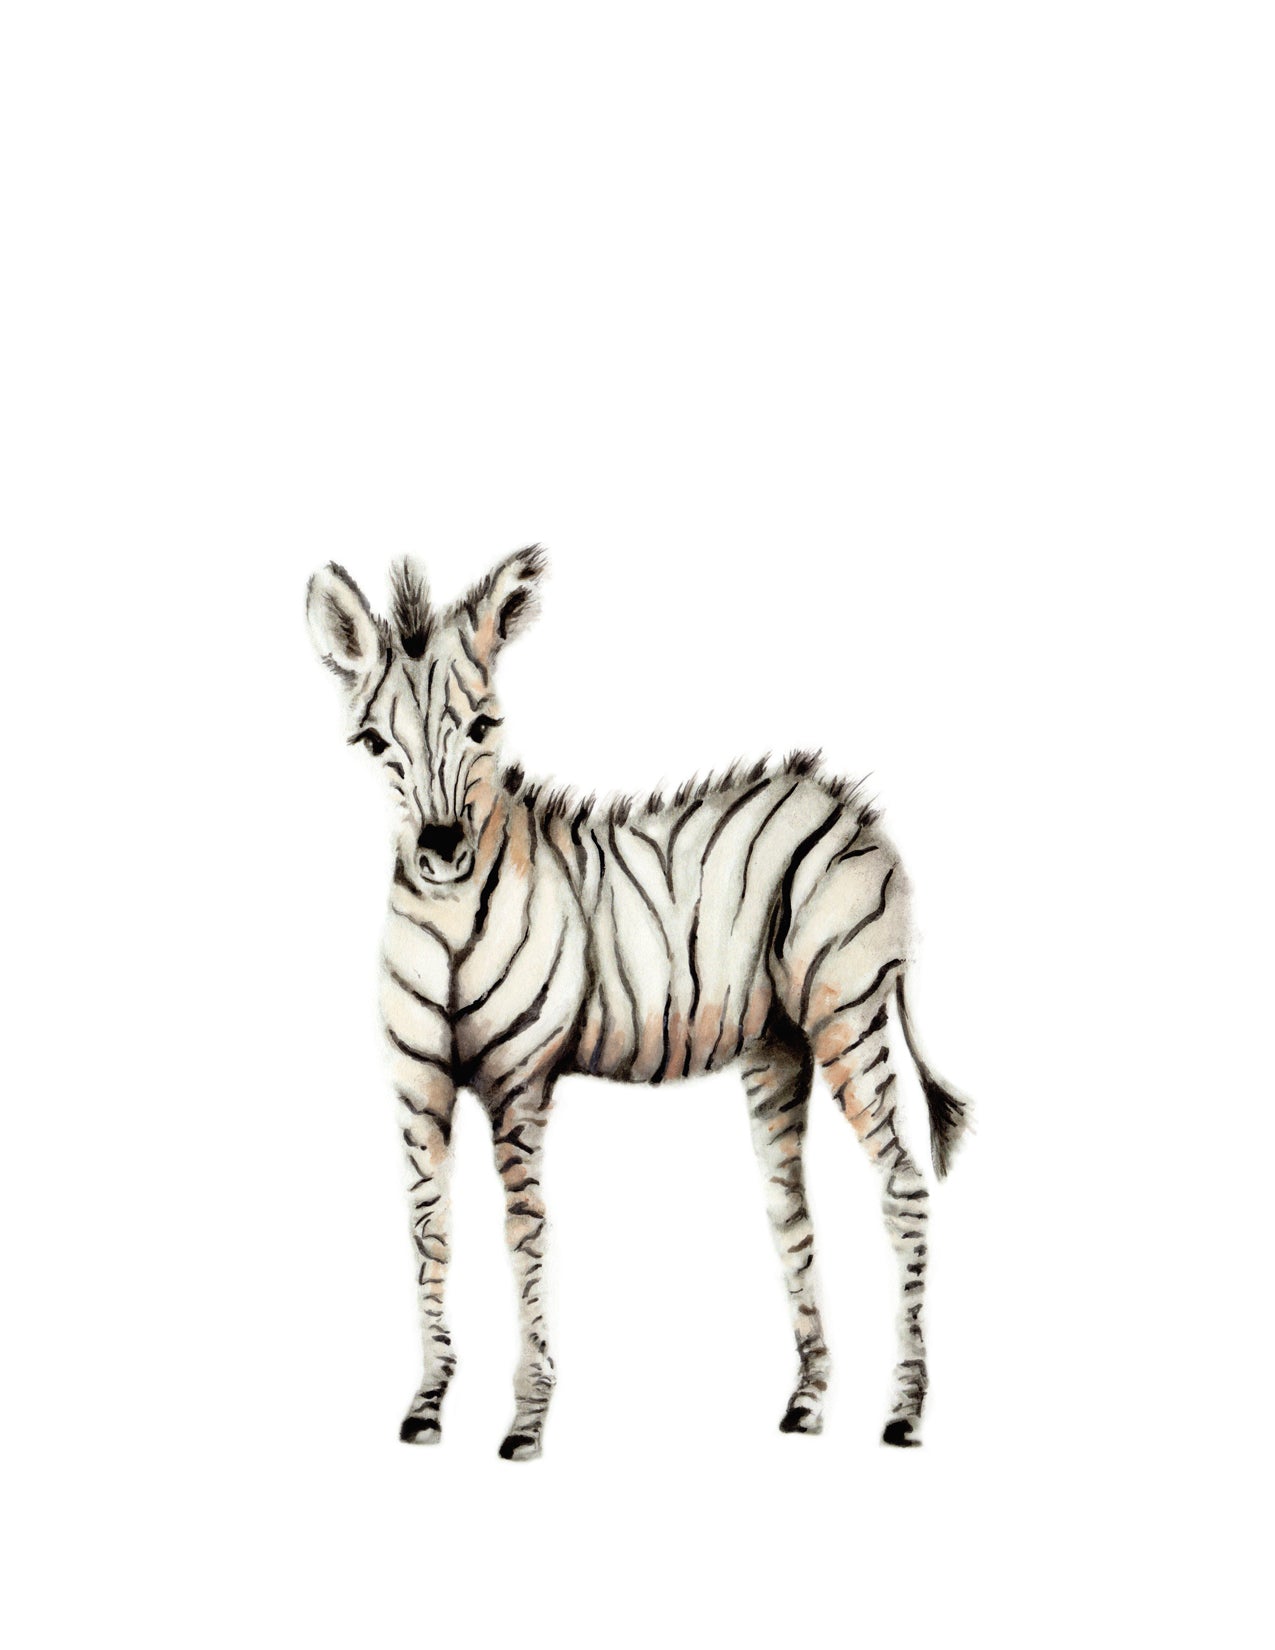 Safari Baby Animal Prints Set 6 - Color - Studio Q - Art by Nicky Quartermaine Scott